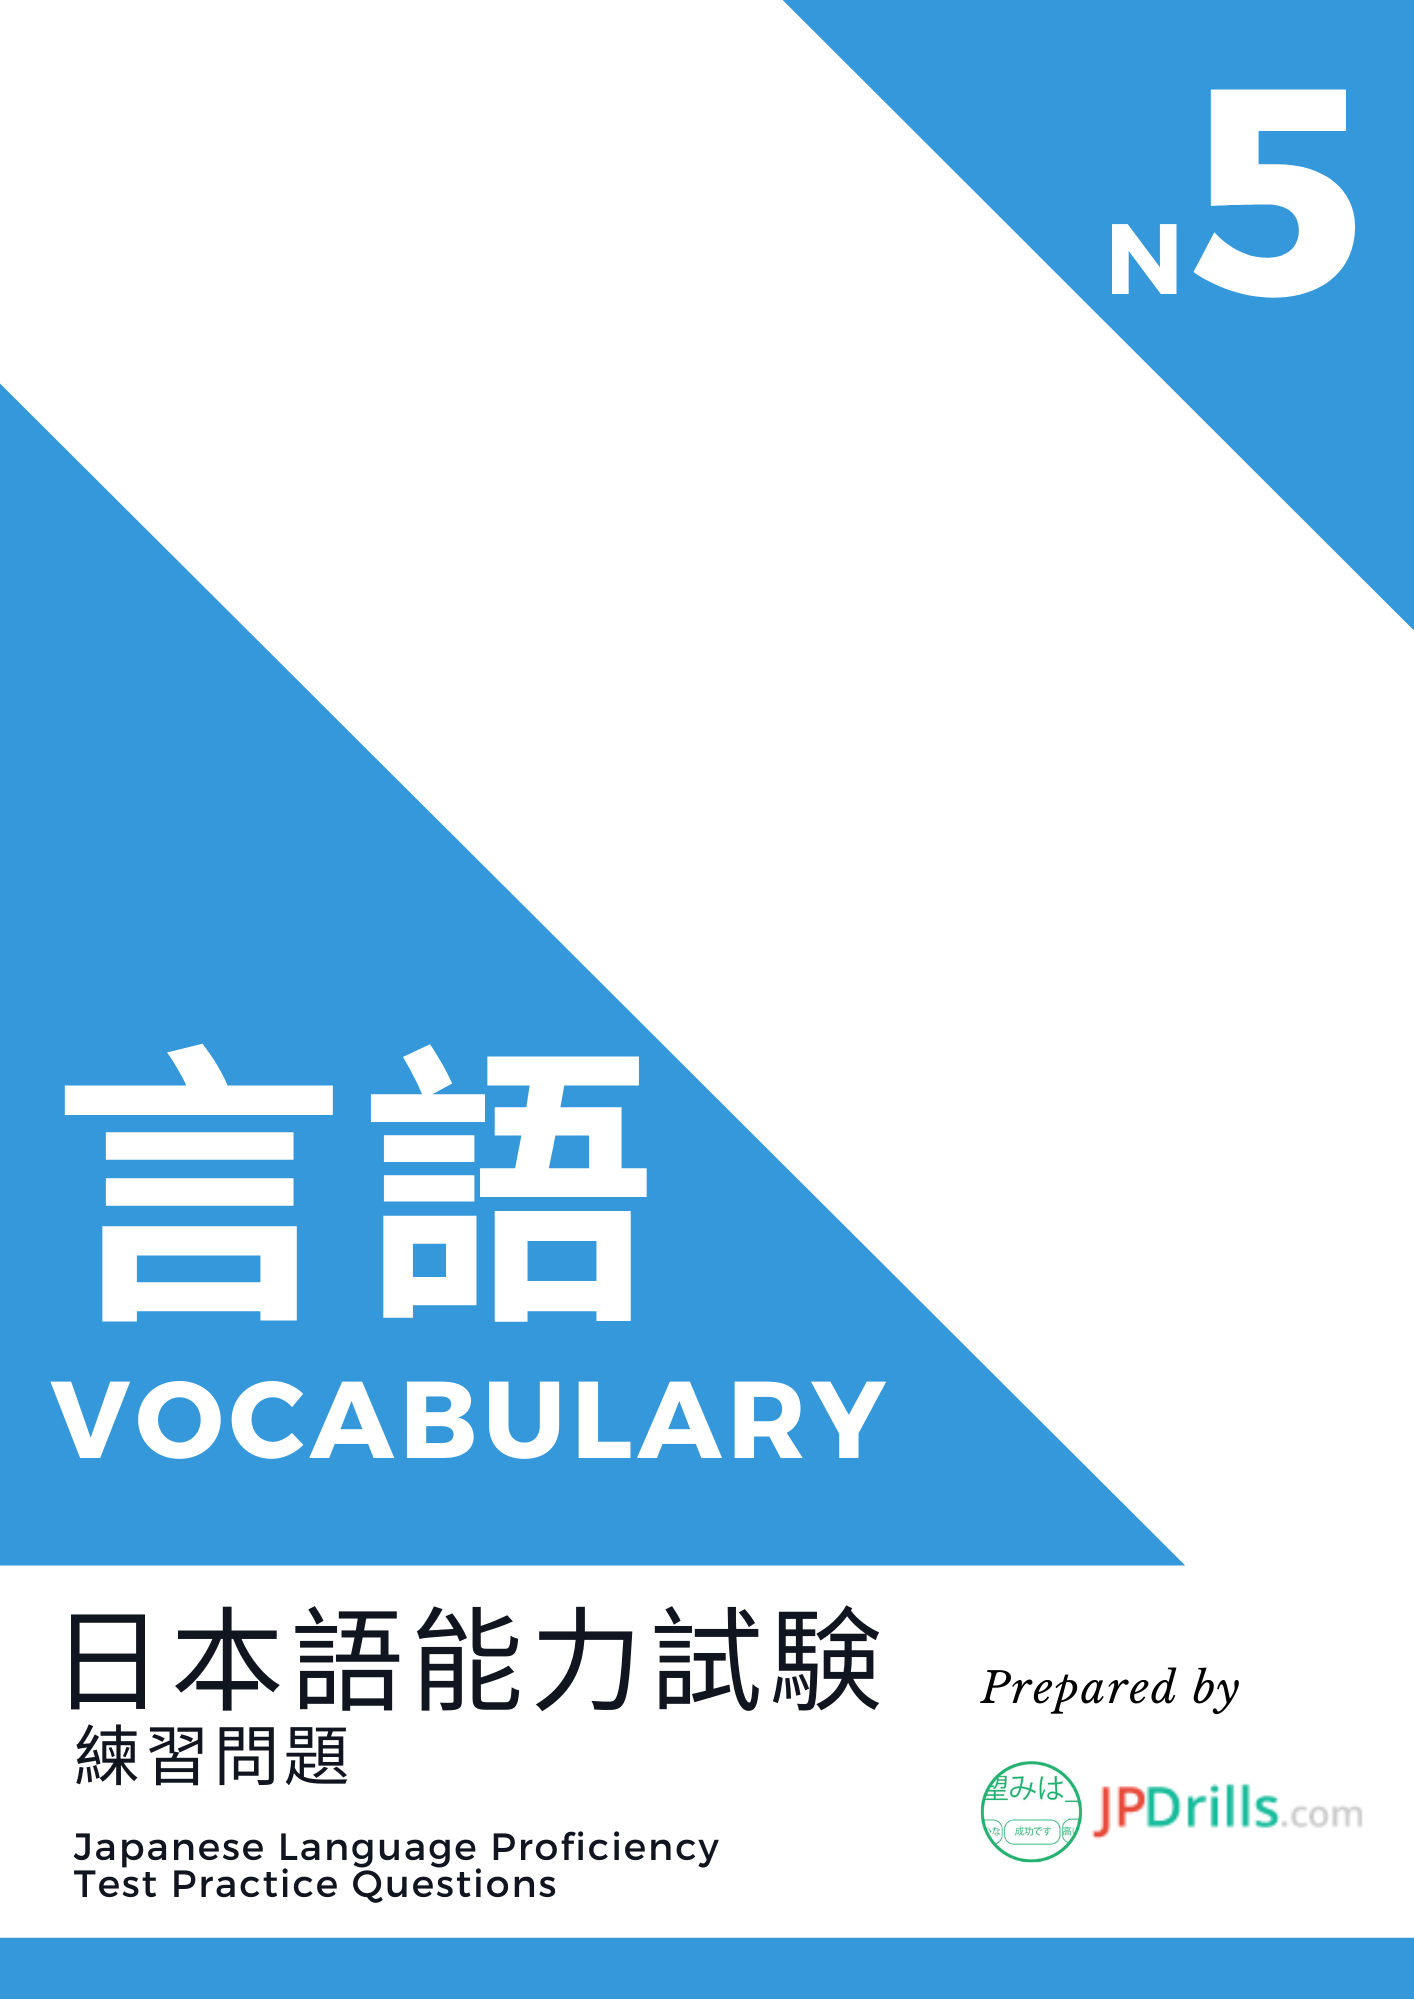 JLPT N5 Vocabulary quiz logo